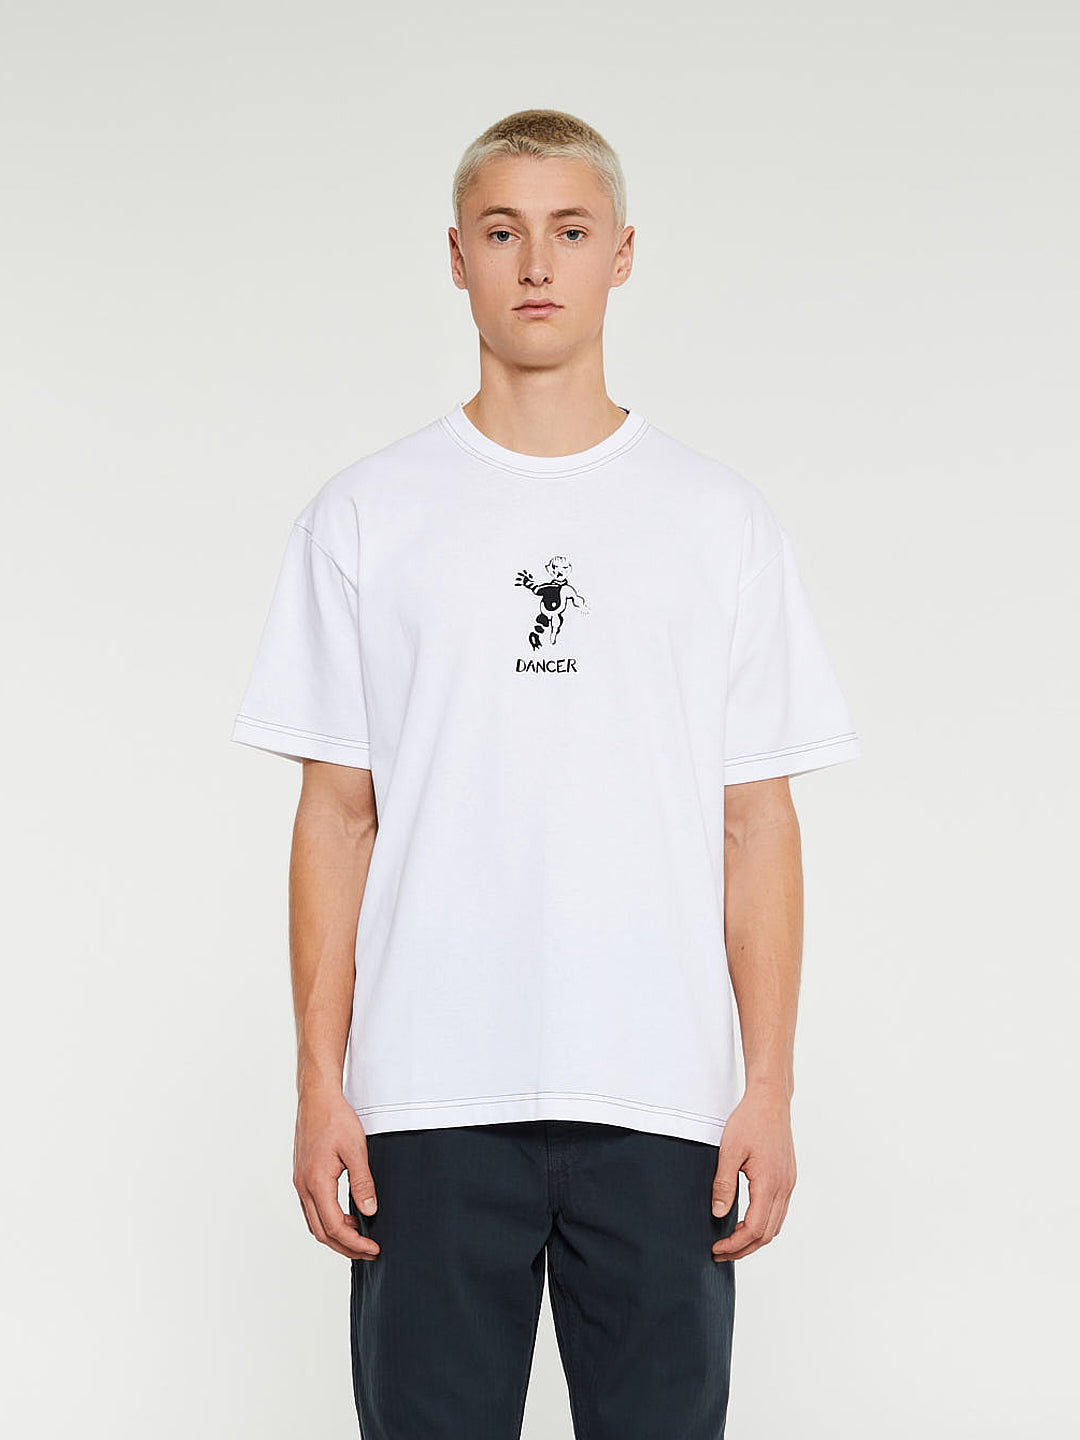 Dancer - OG Logo T-Shirt in White with Black Stitch